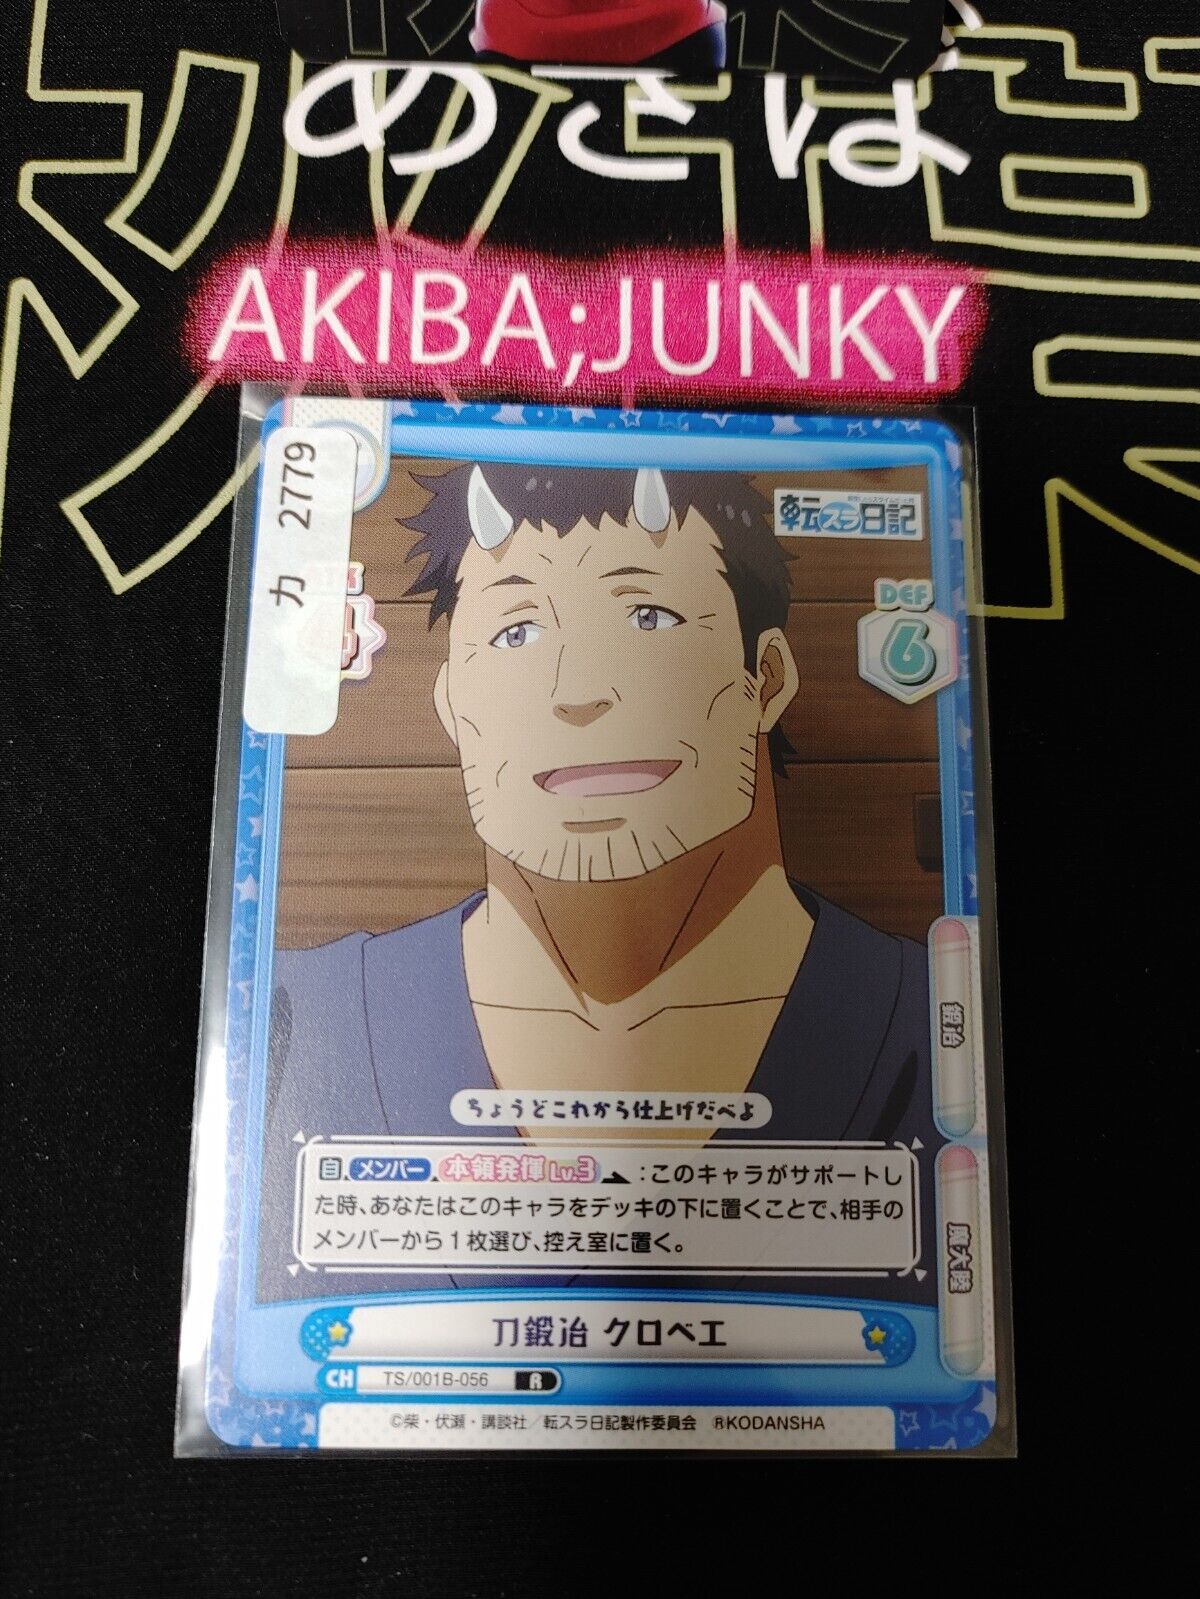 That Time I Got Reincarnated As A Slime Card Kurobe TS/001B-056 Japan